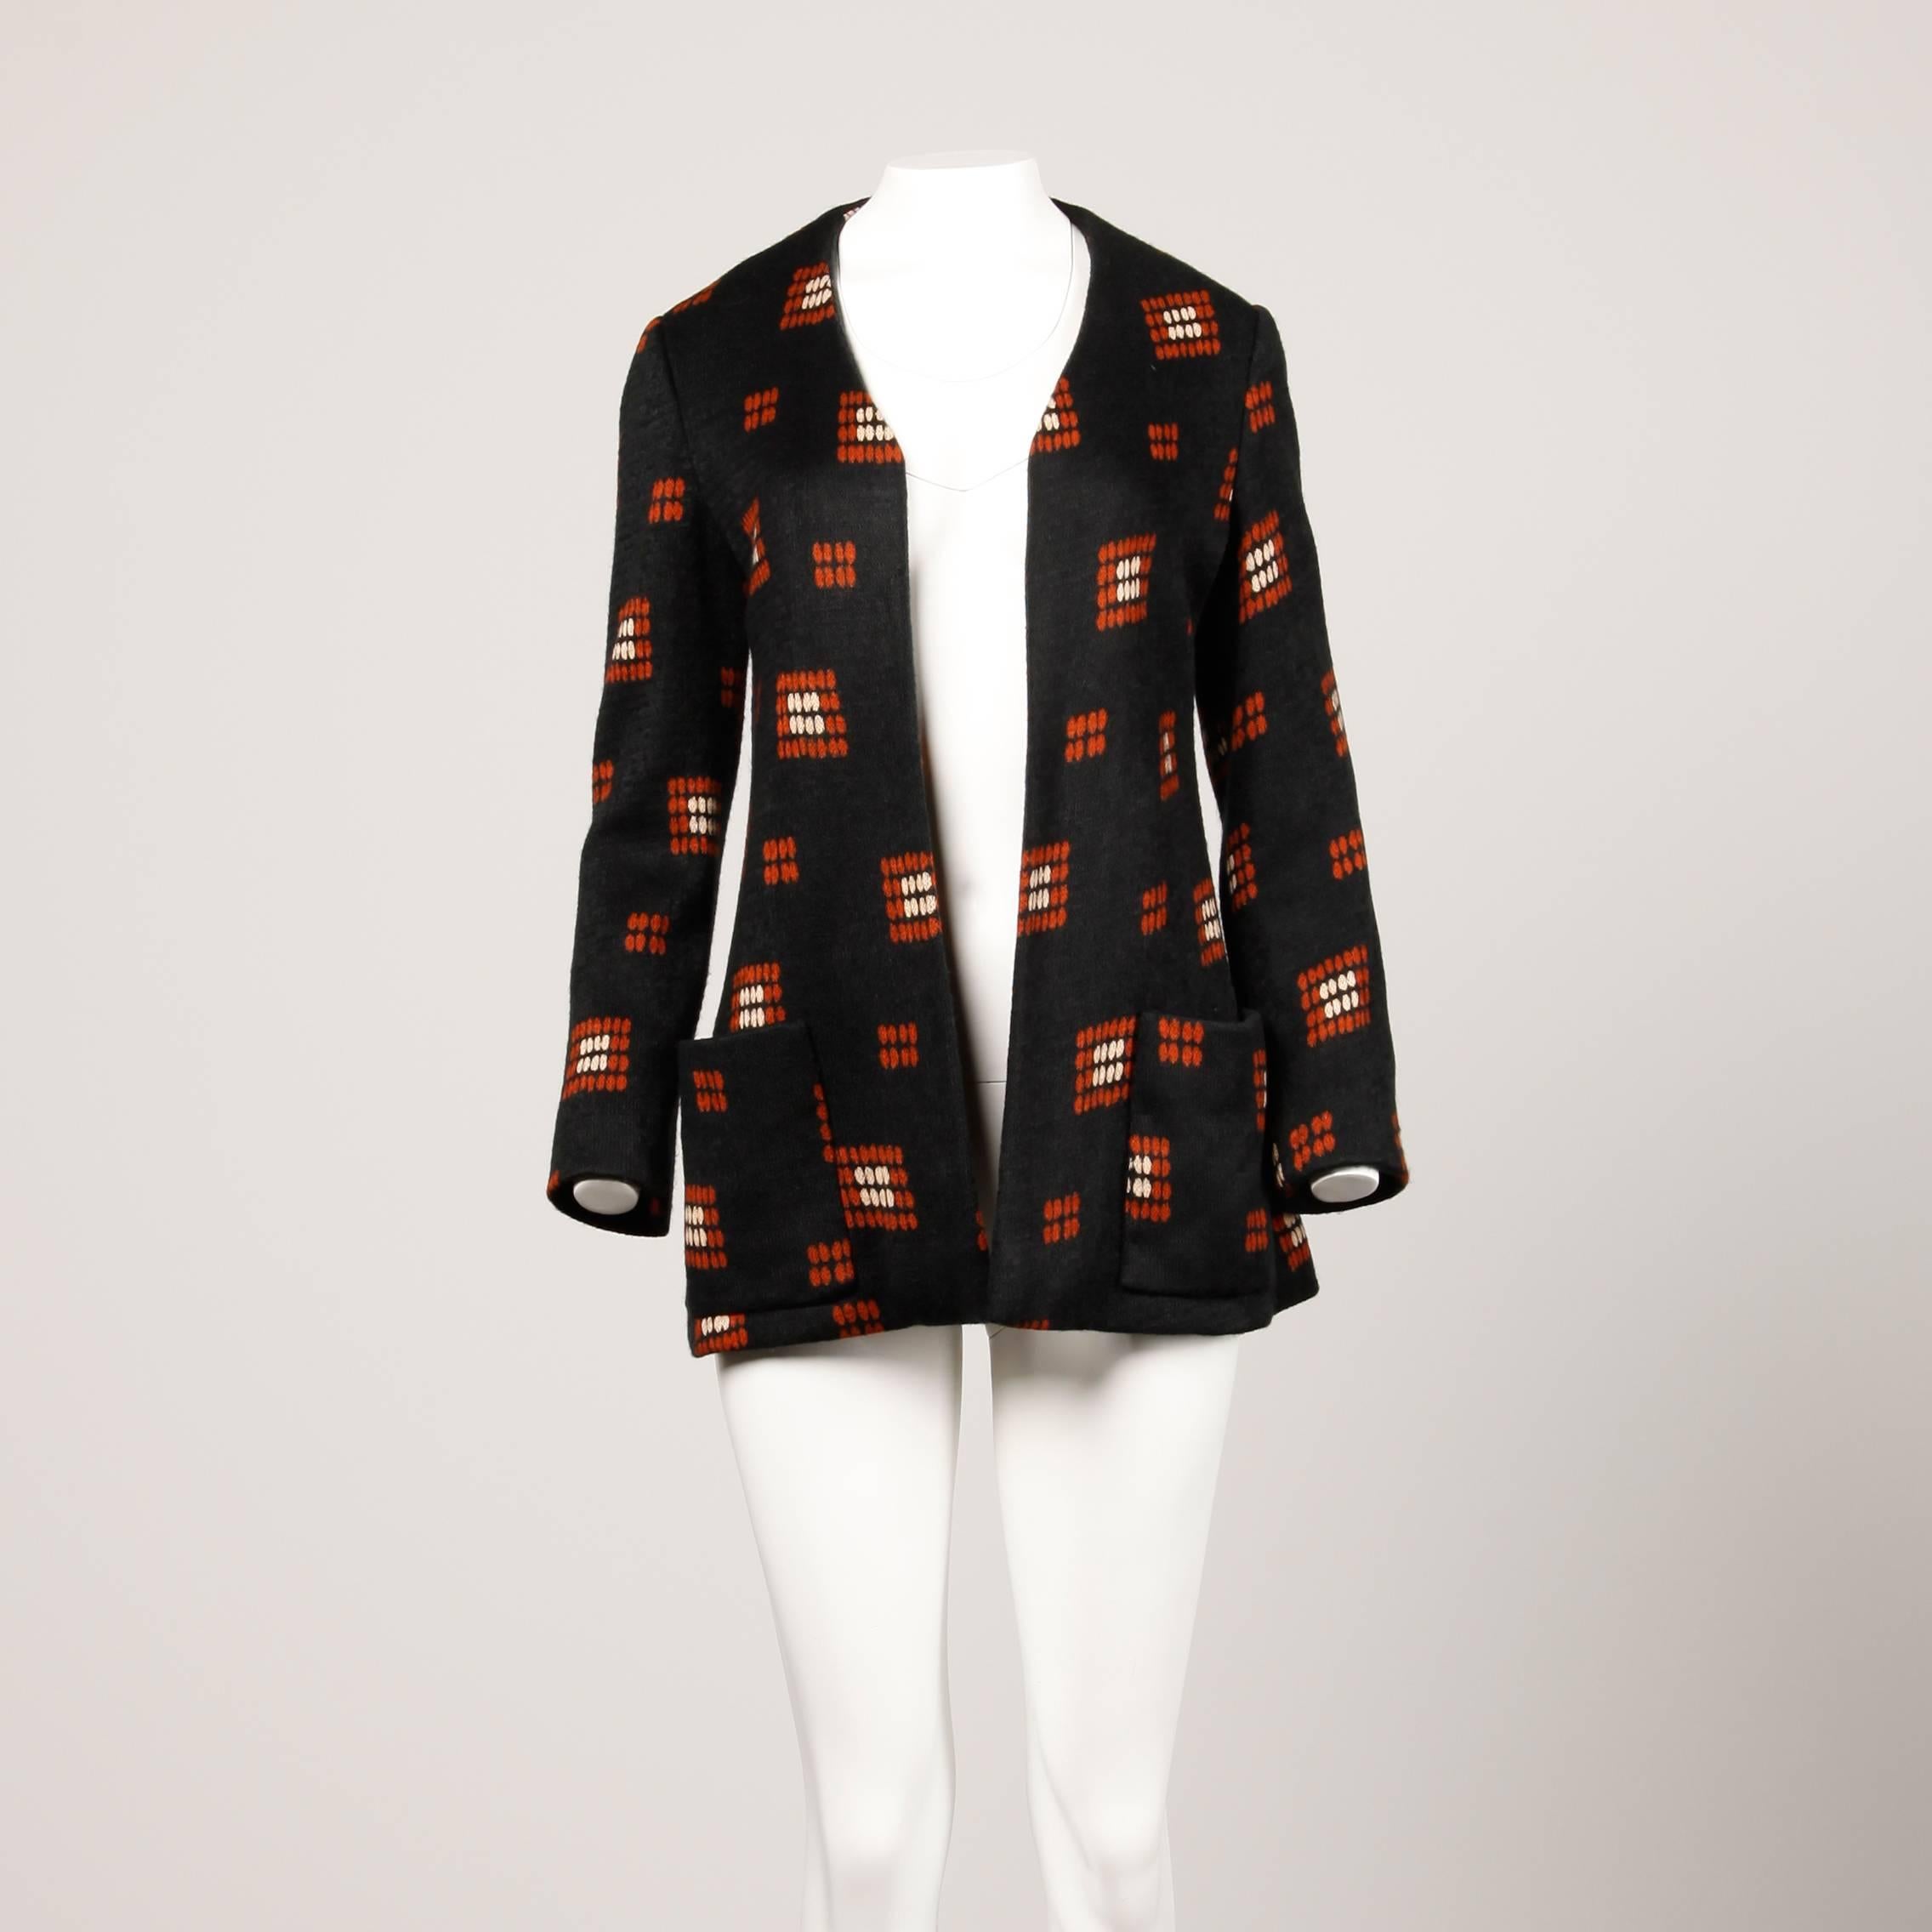 Black 1970s Teal Traina Vintage Wool Knit Cardigan Sweater Blazer Jacket